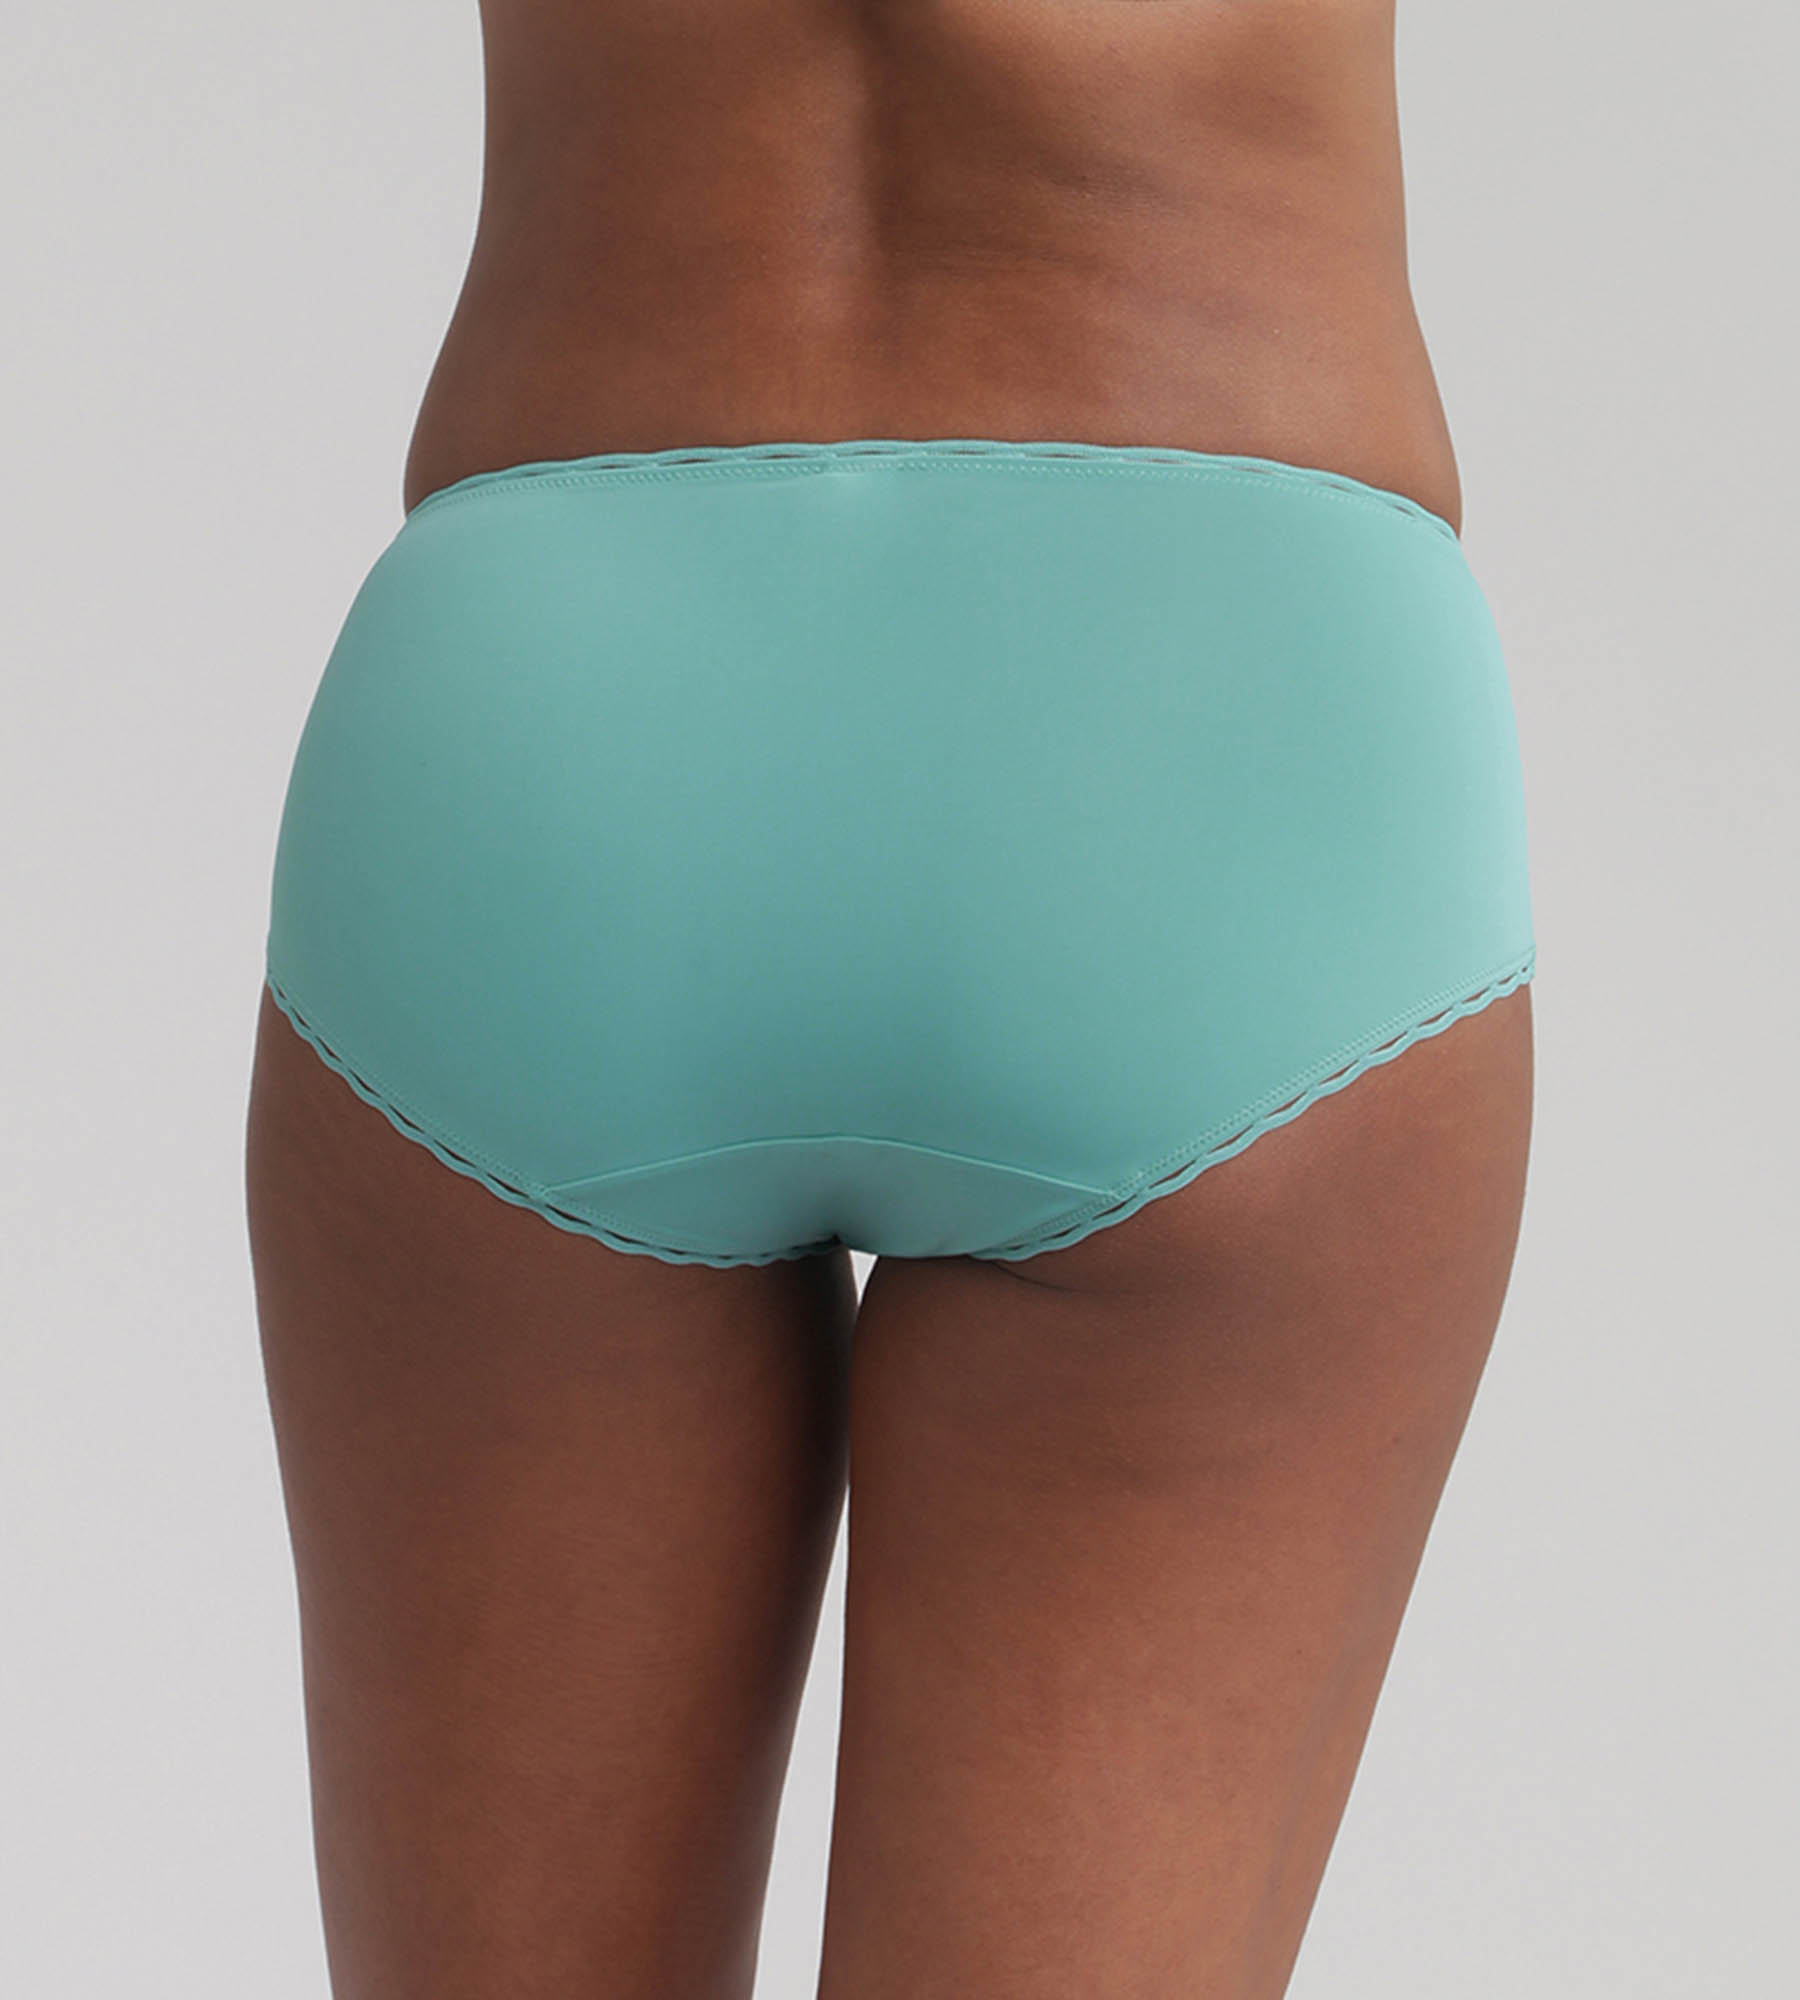 Feiona-4PS Women's Underwear Mid-Waist Panties Cute Sweet Underwear Large  Size Seamless Briefs 